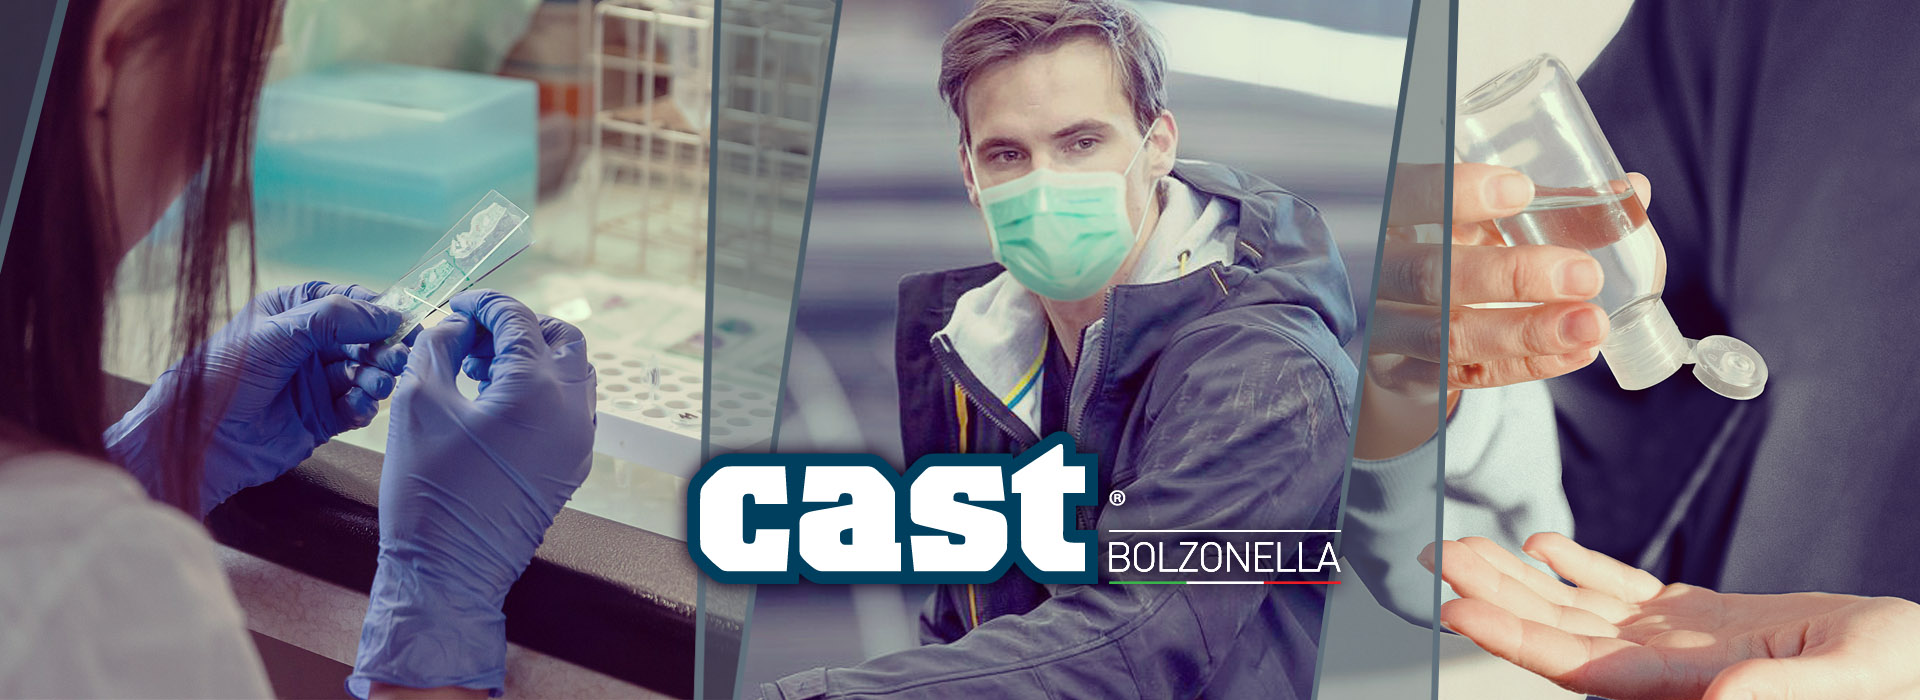 Disposible nitrile gloves | Cast Bolzonella